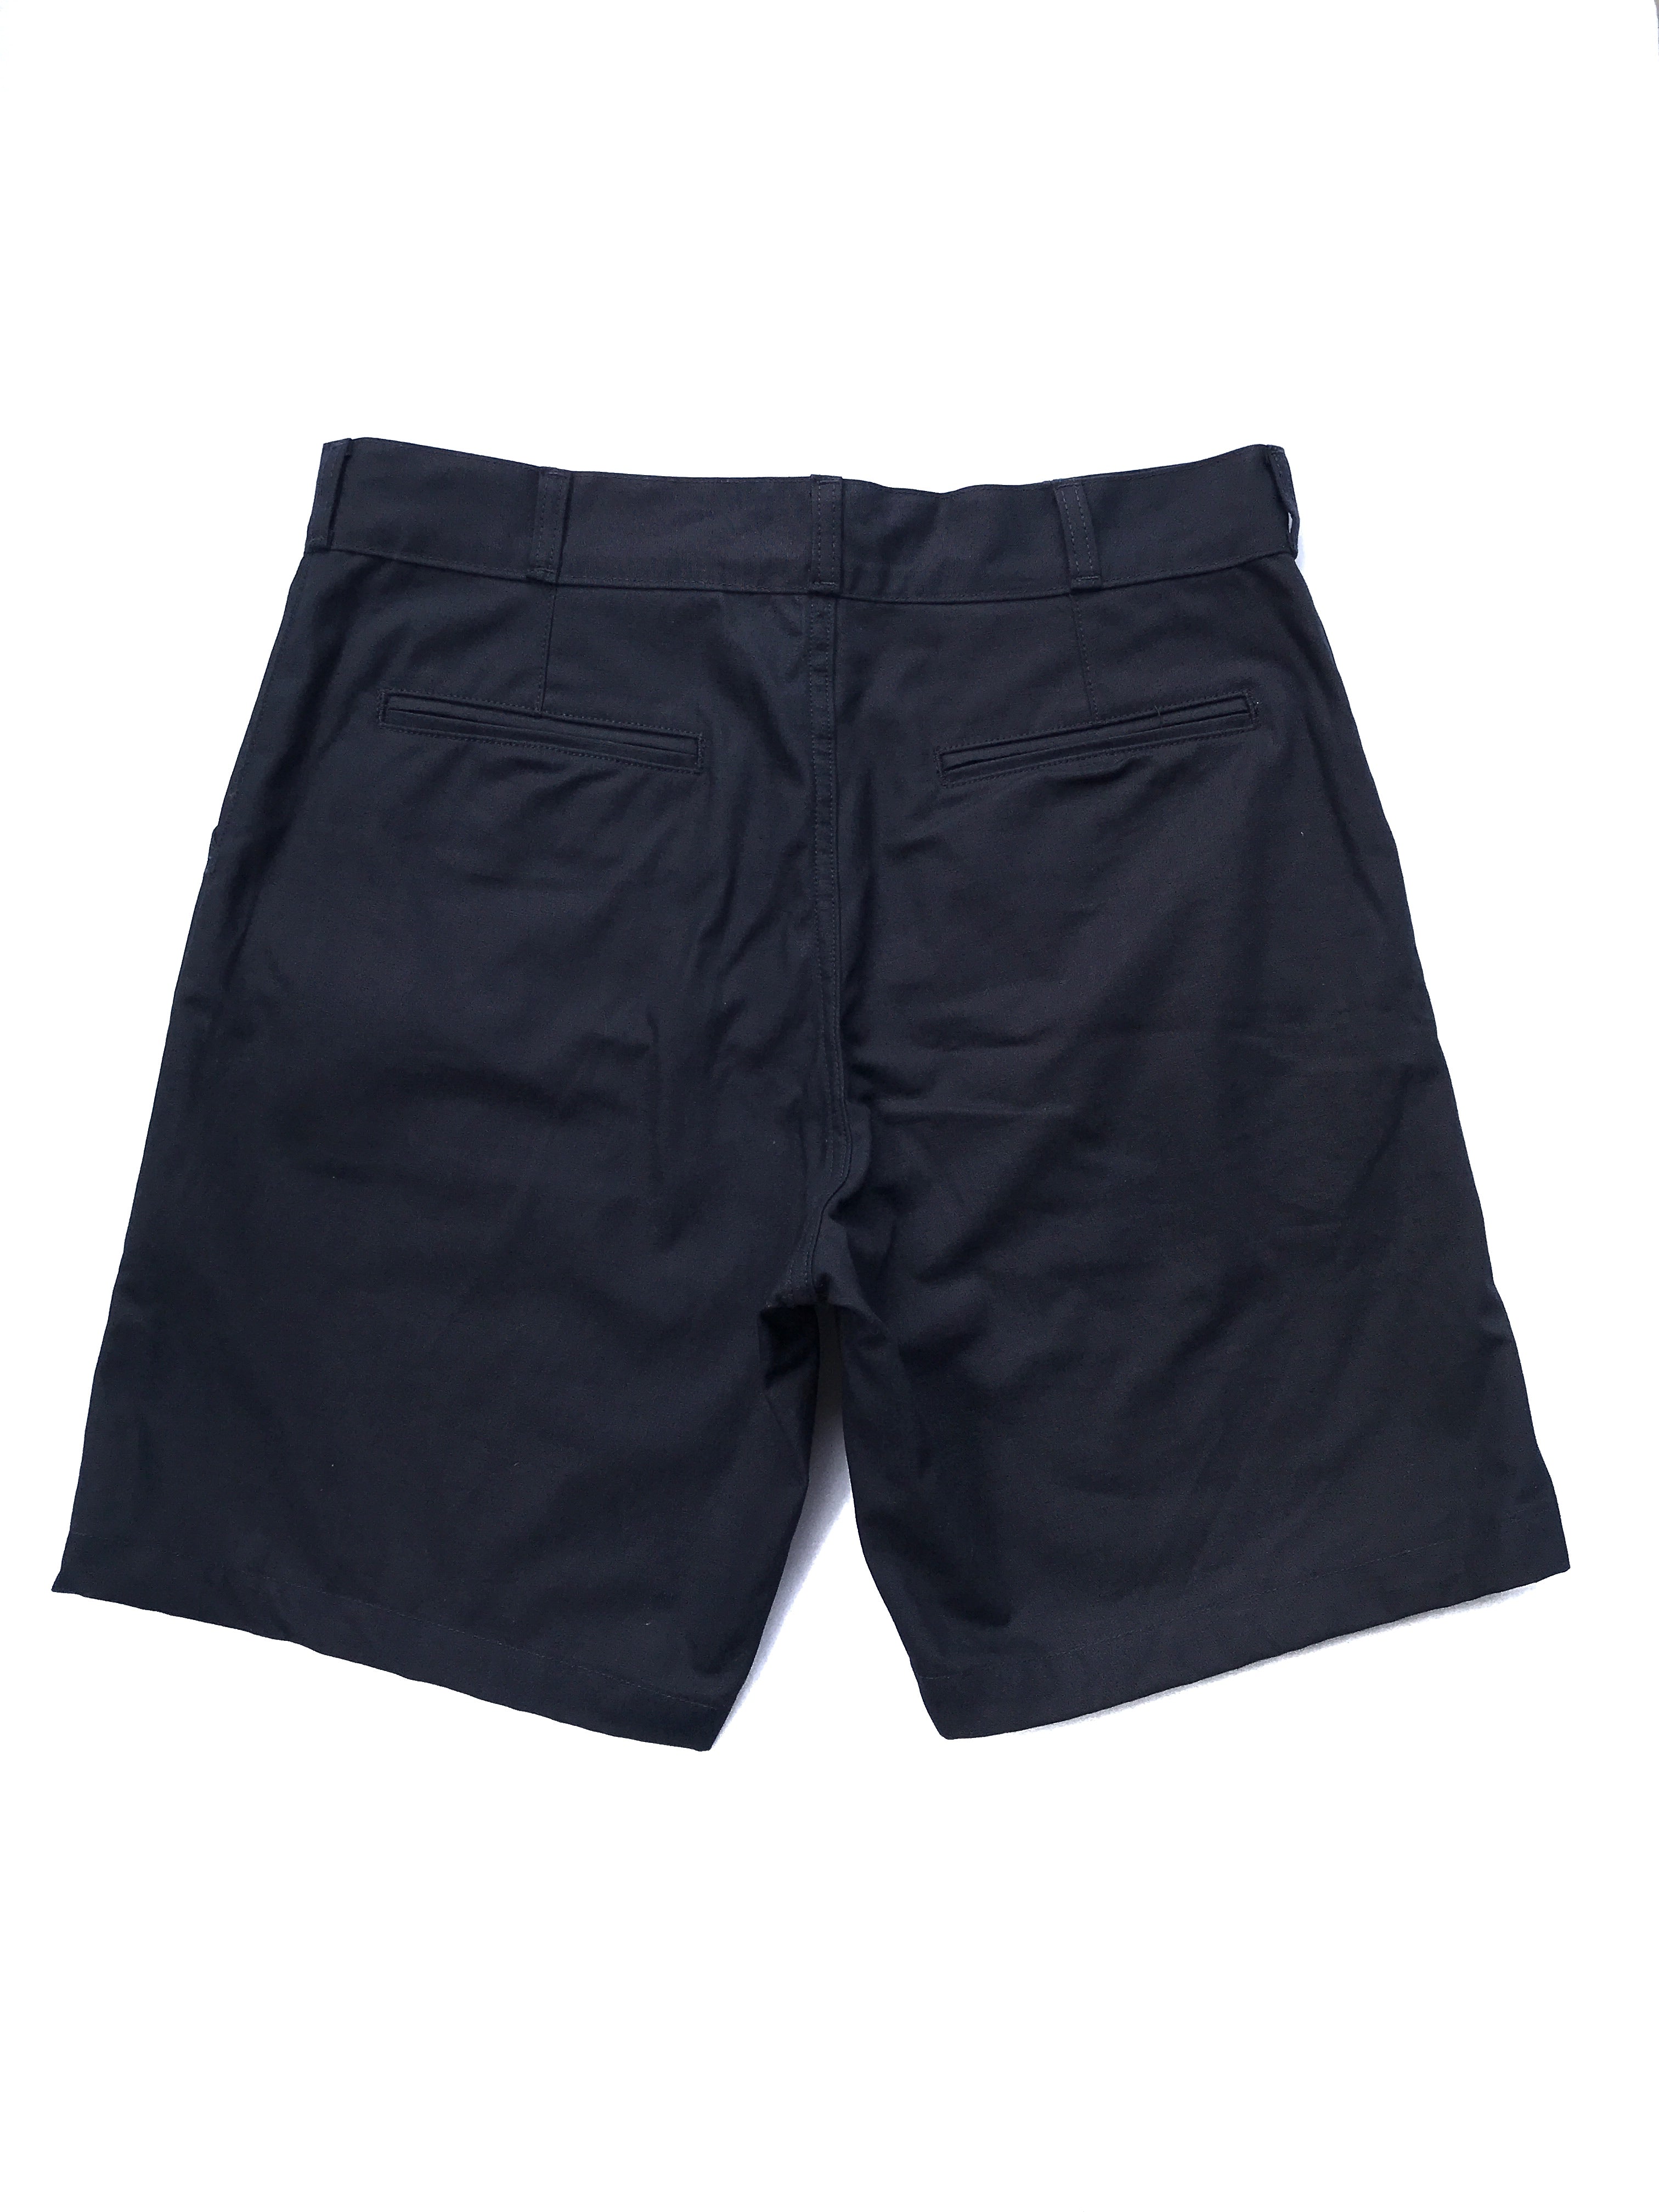 LD Rando Shorts in 8 oz. Navy Poplin